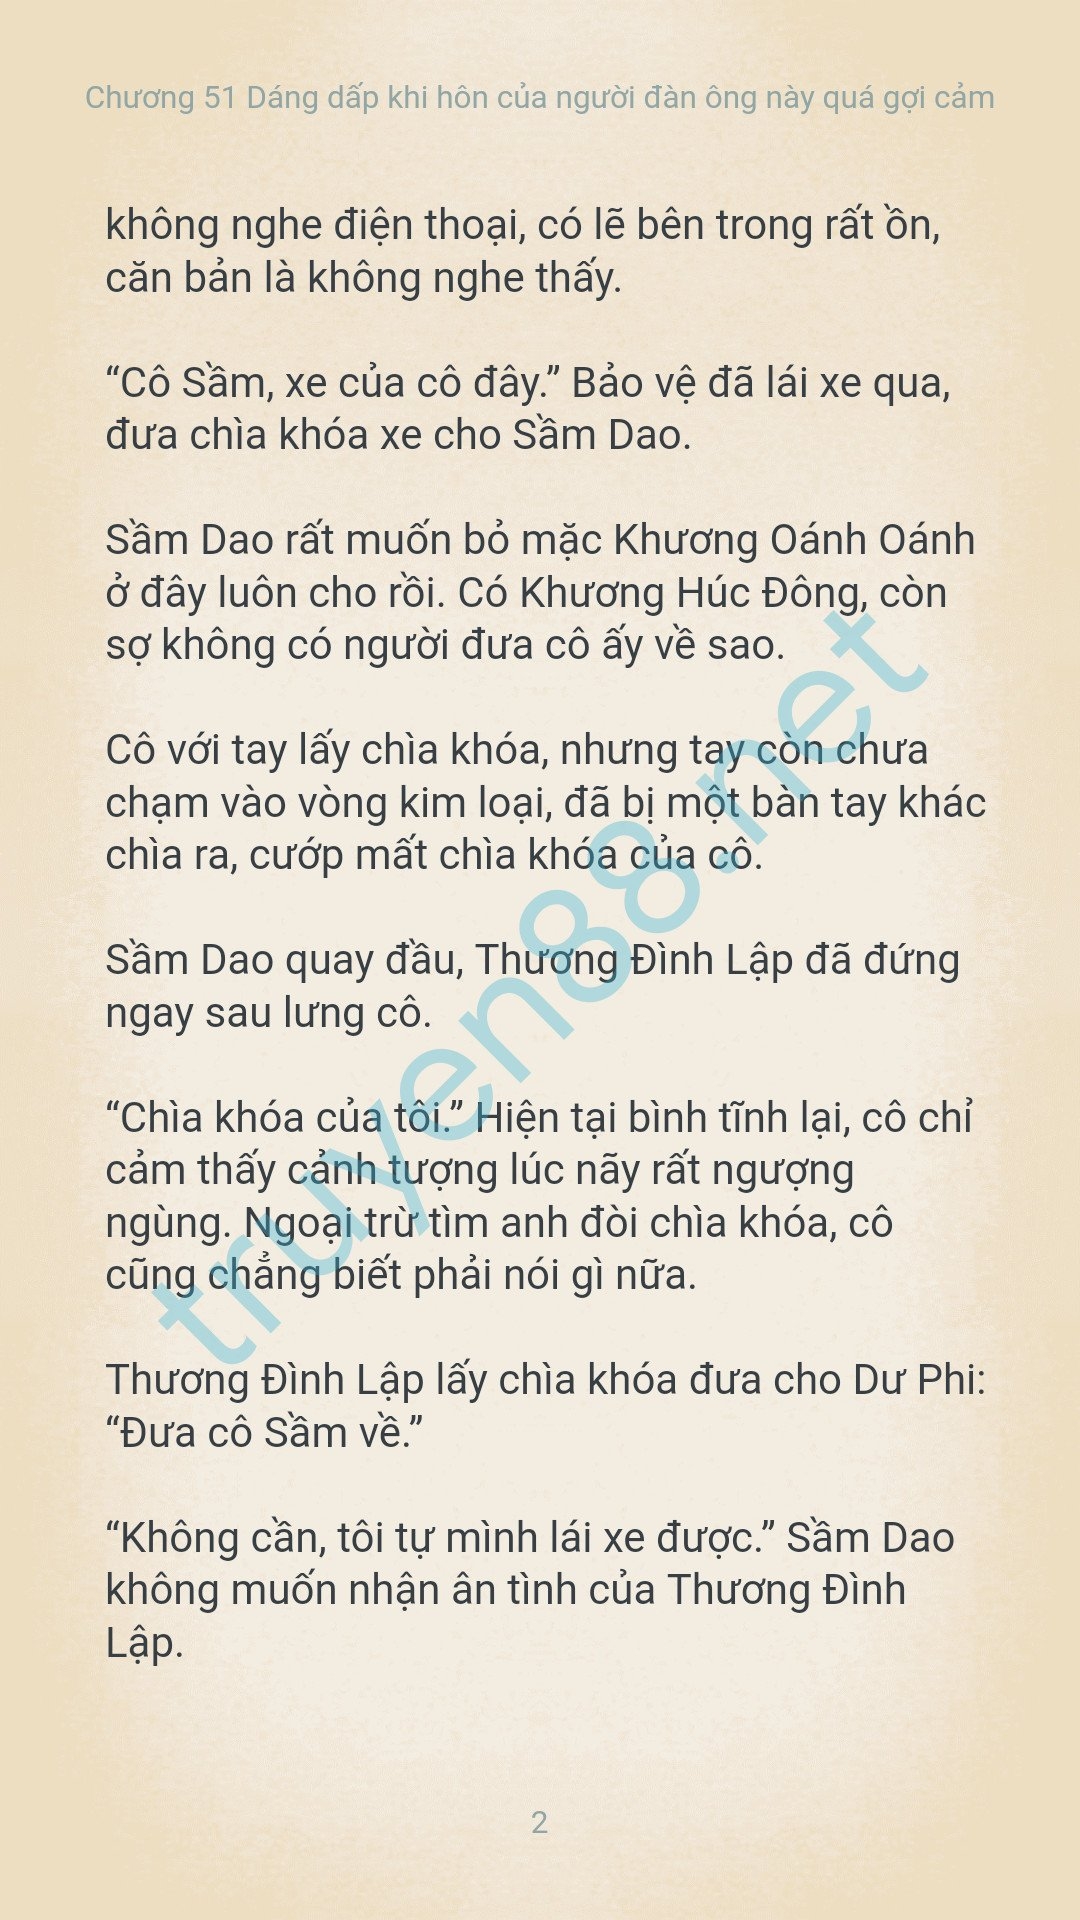 lua-chu-tich-ve-nha-lam-chong-51-1